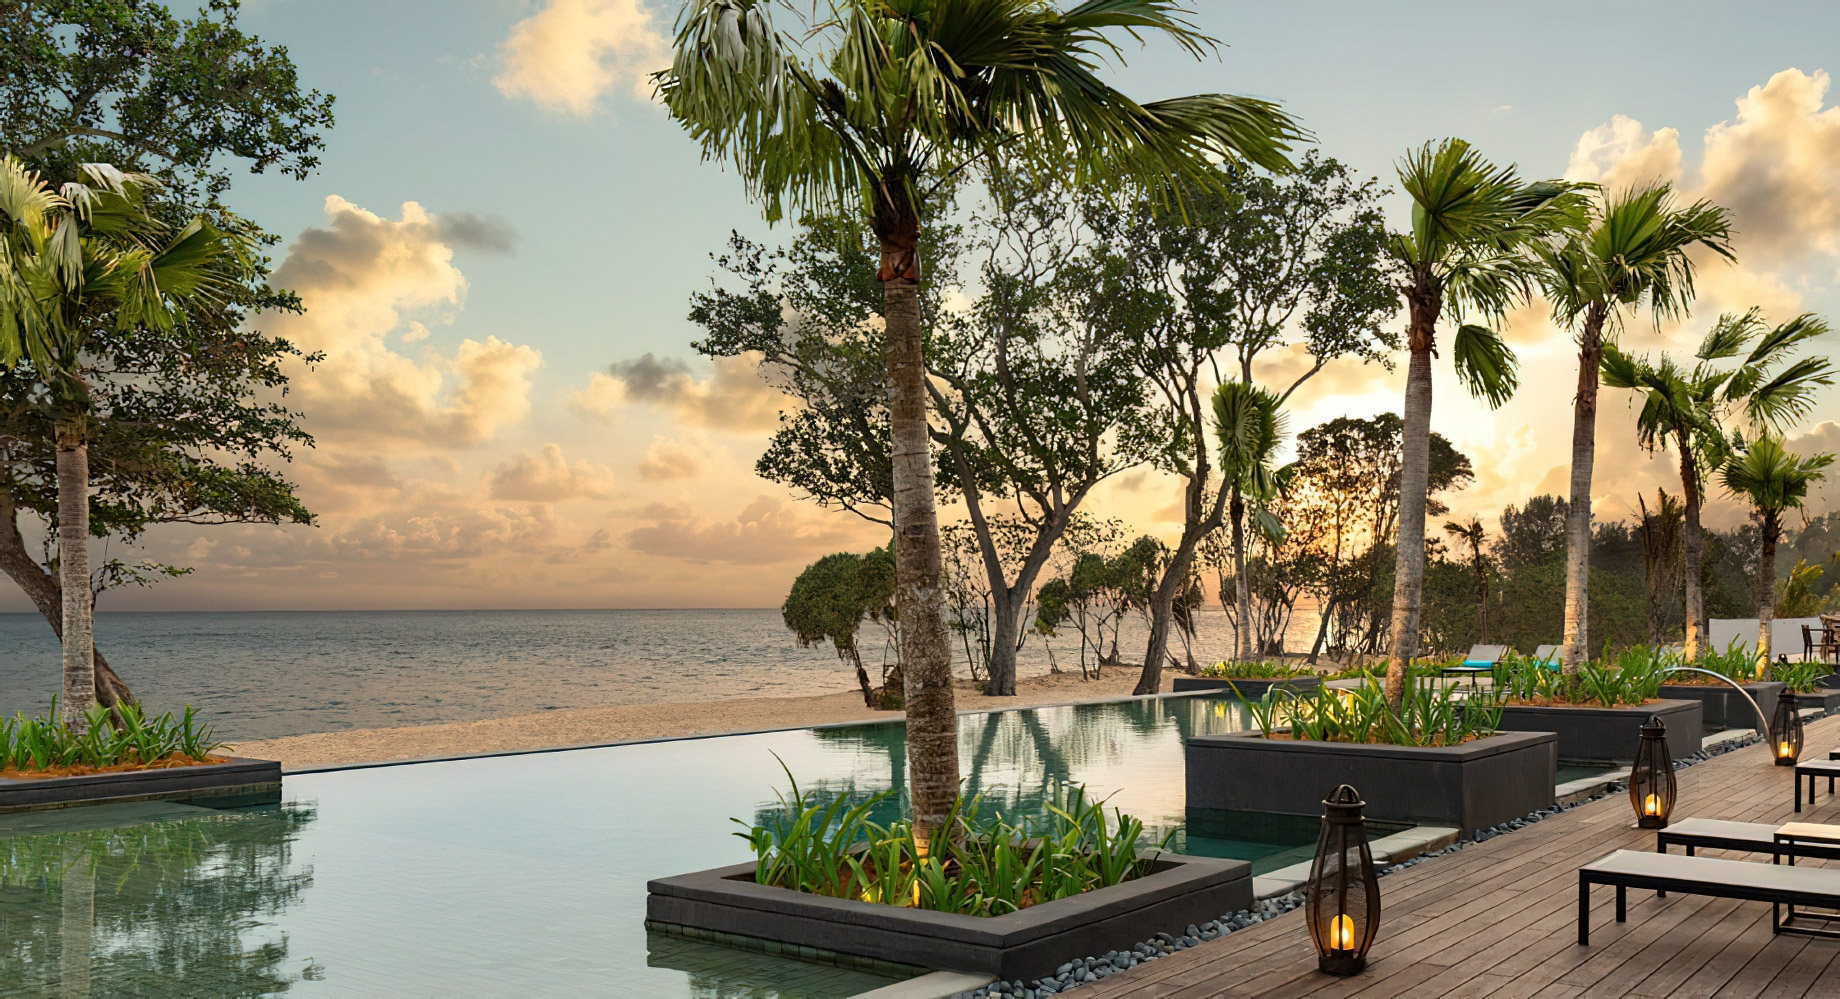 Anantara Desaru Coast Resort & Villas - Johor, Malaysia - Beach View Sunset